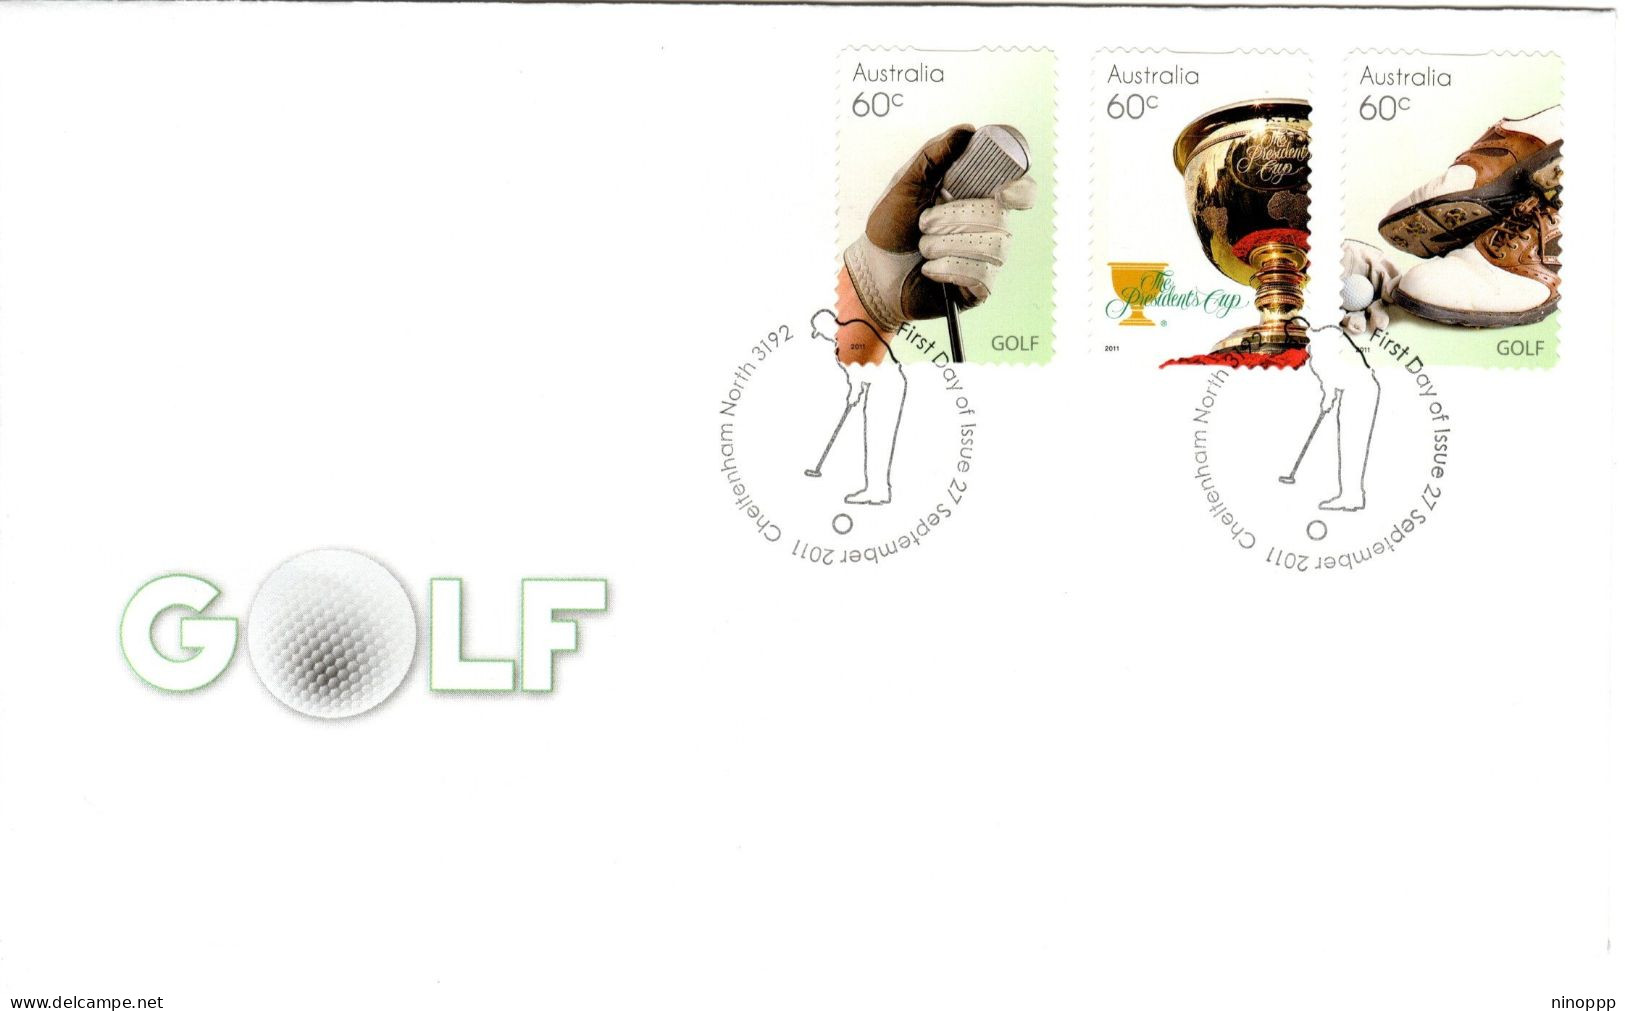 Australia 2011 Golf,Self-adhesive,FDI - Poststempel